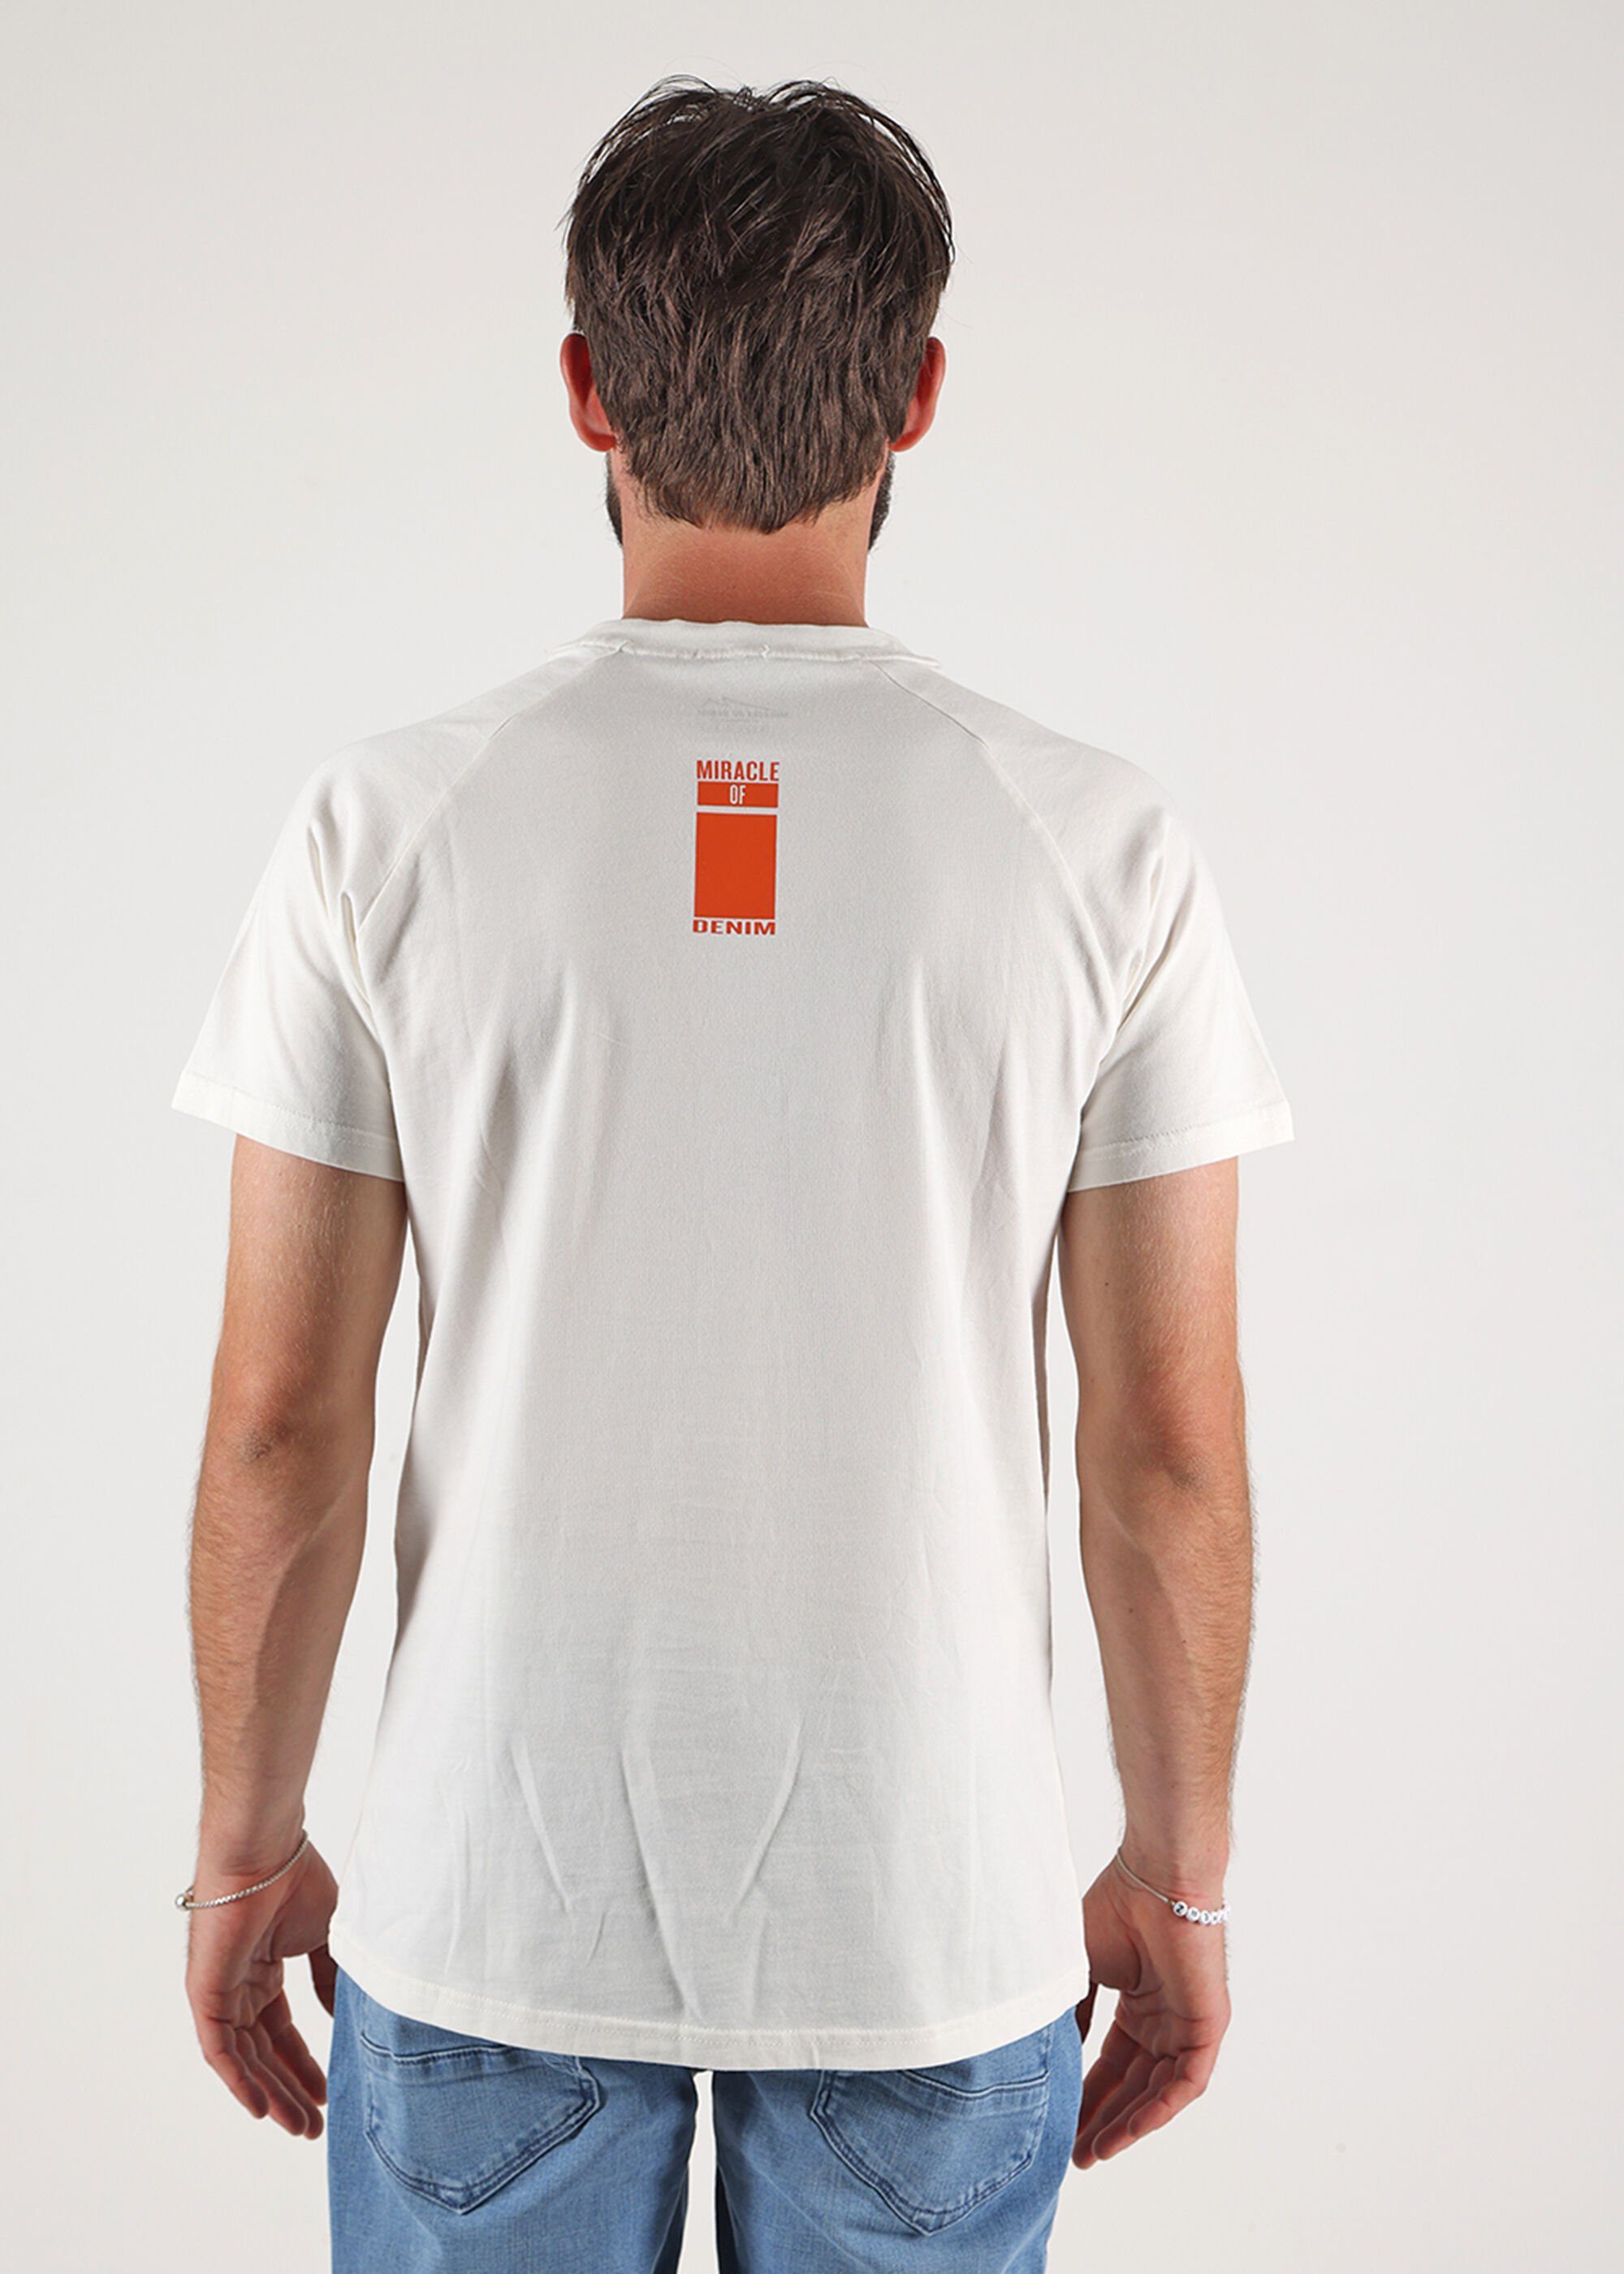 White unifarbenen Miracle Denim im of Design T-Shirt